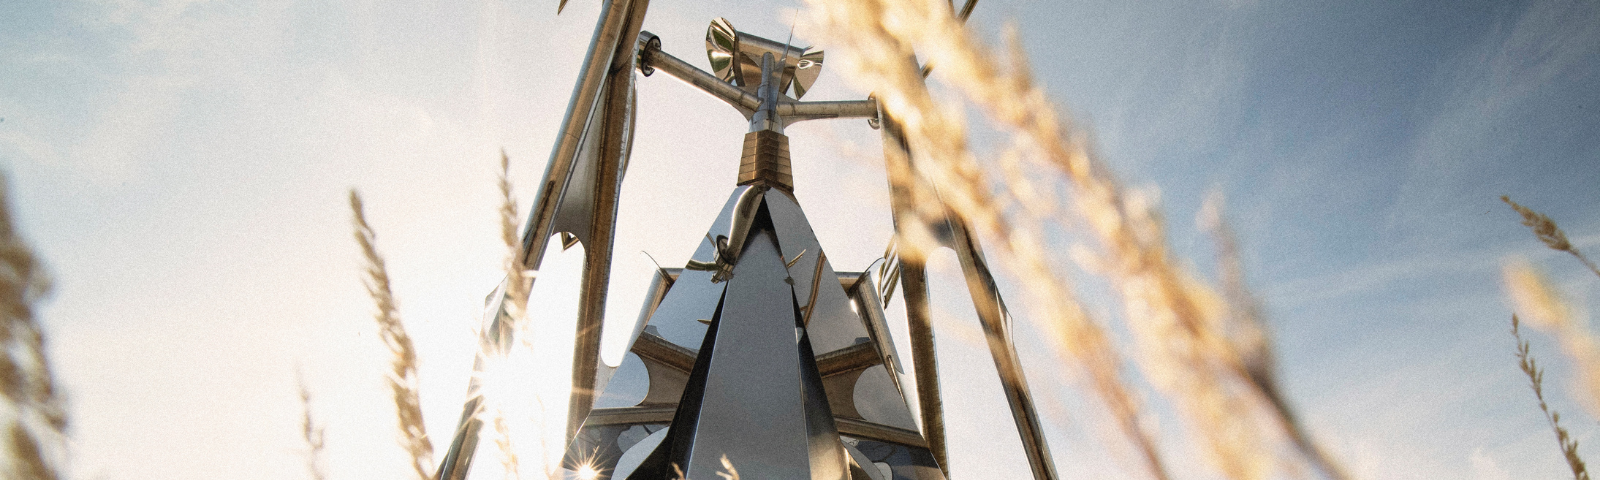 A large metal sculpture of a praying mantis